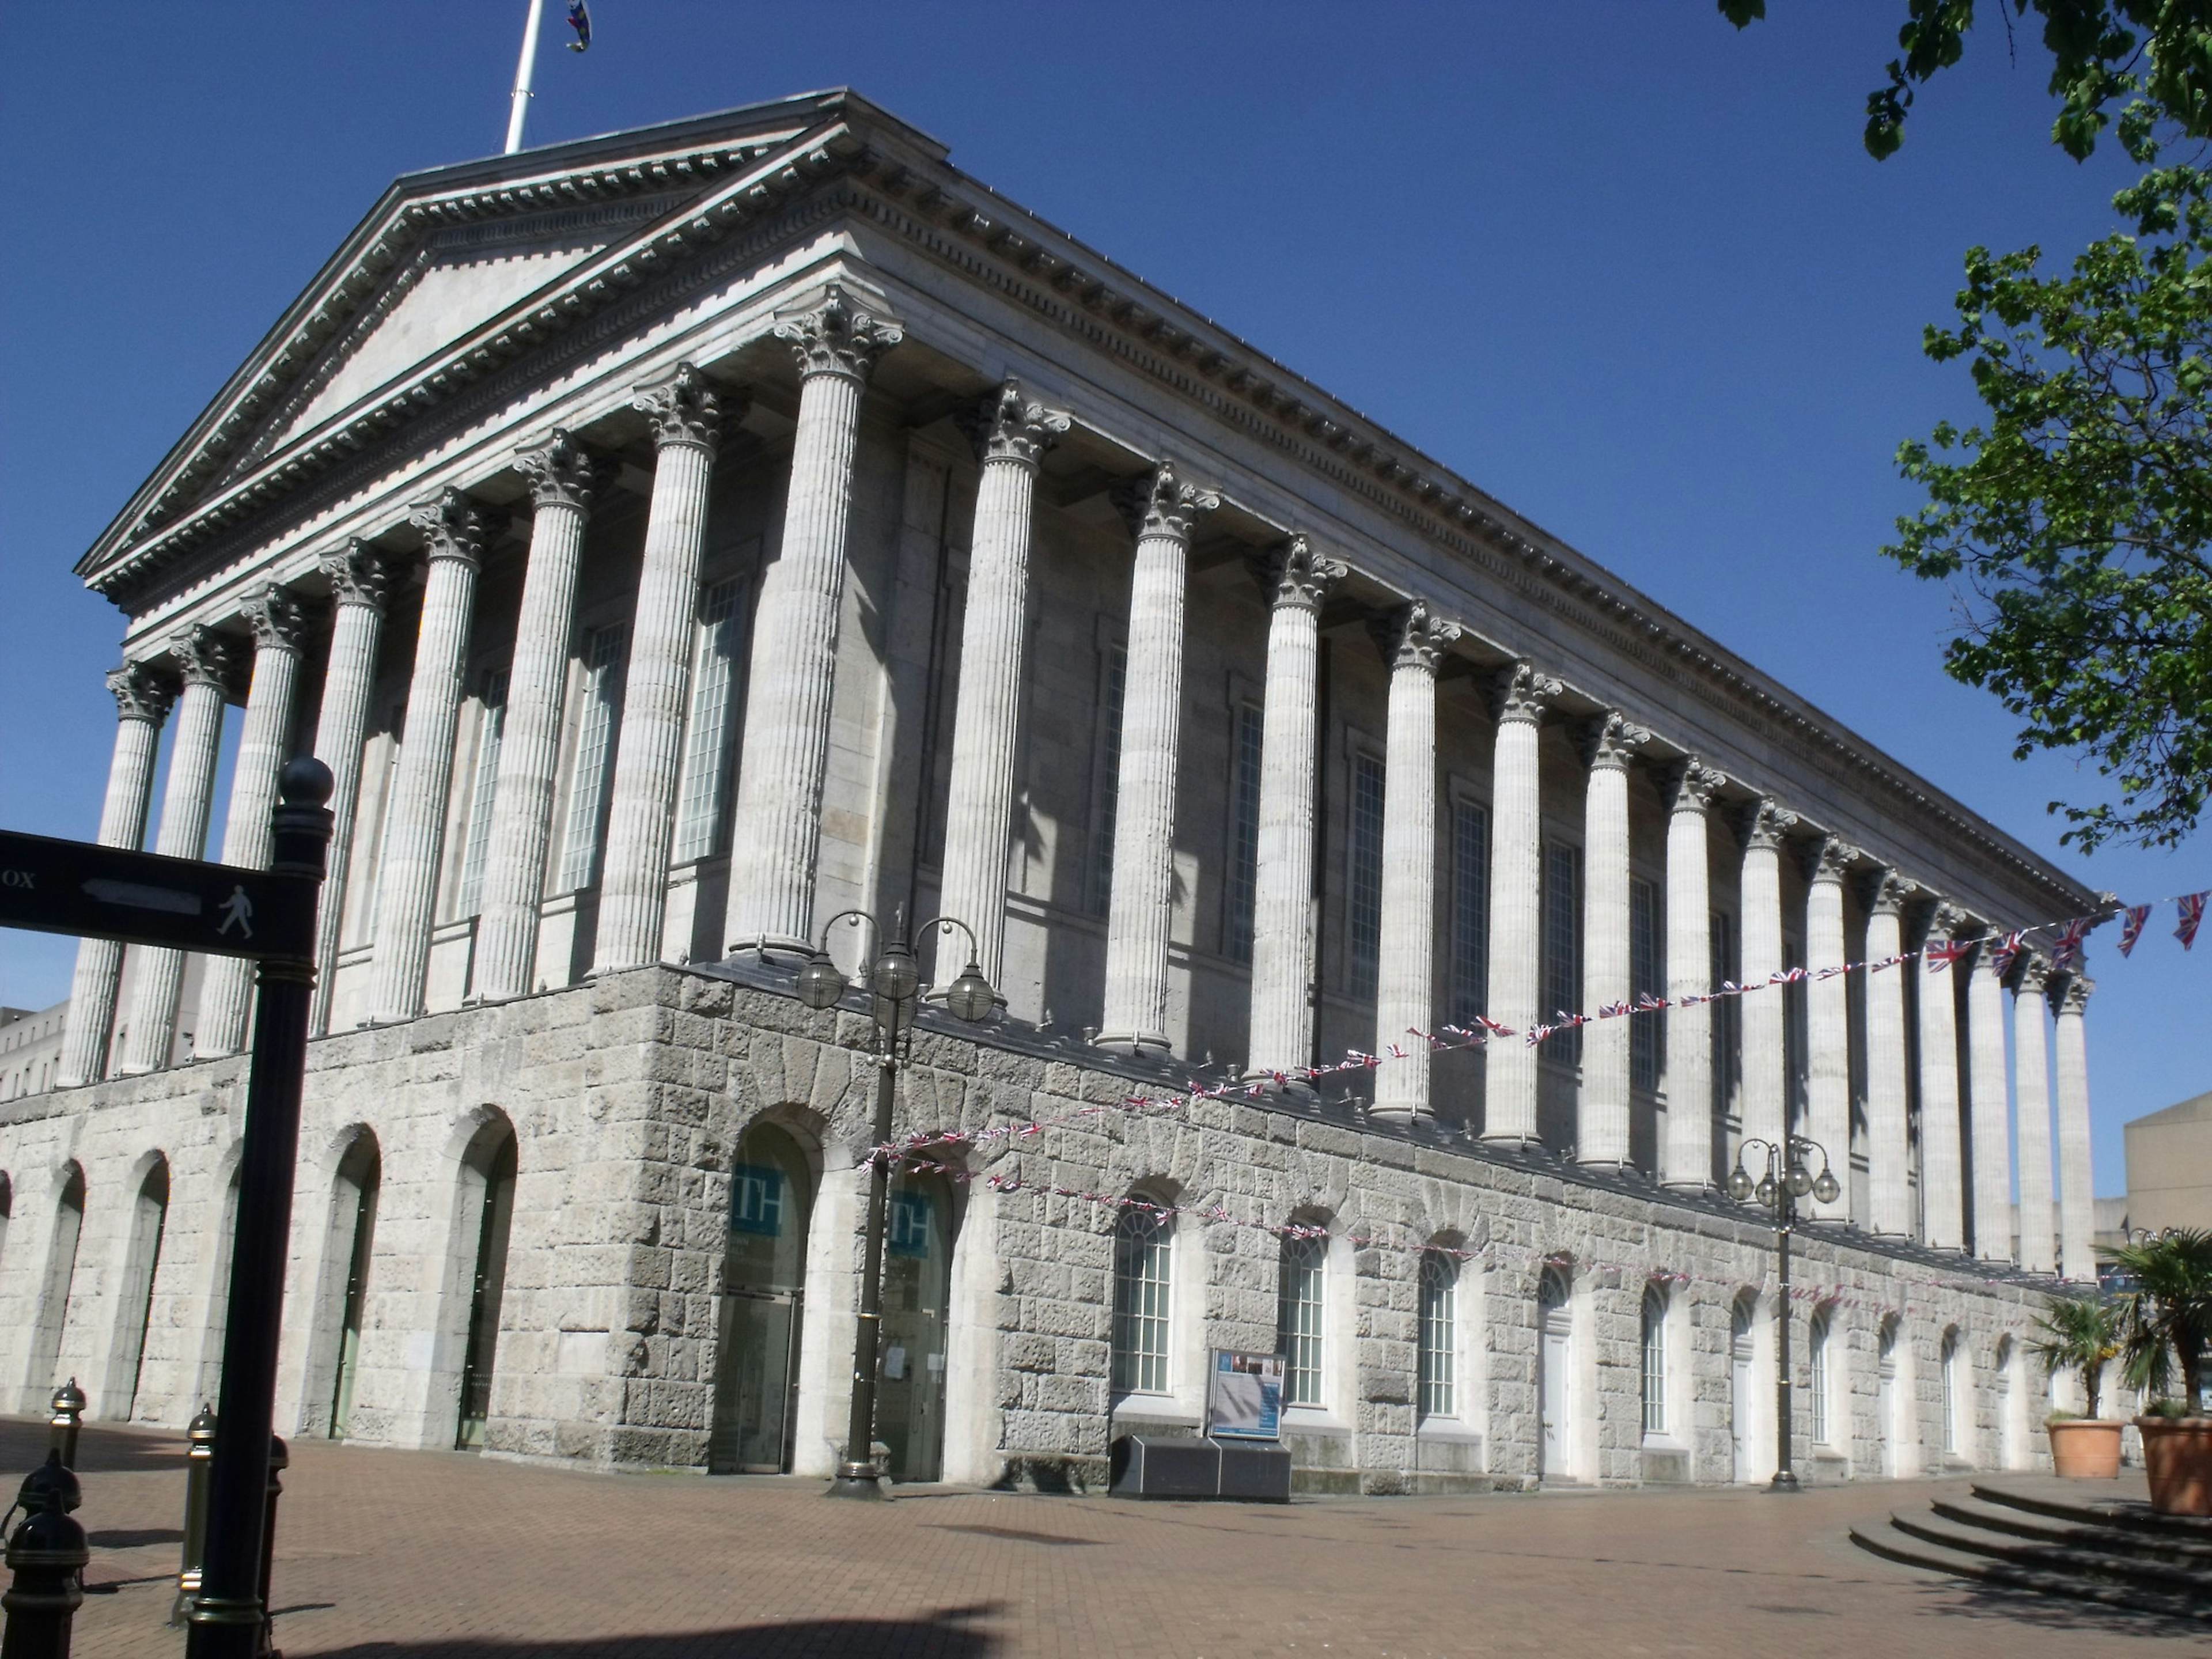  Birmingham Town Hall